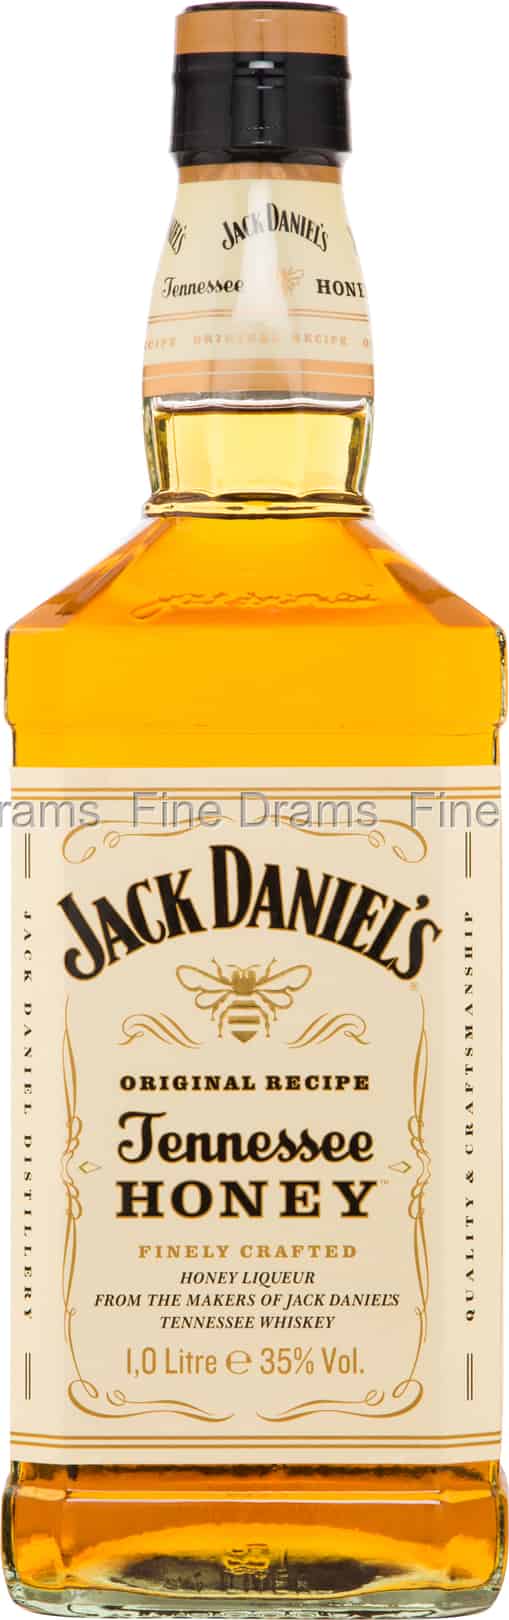 https://images.finedrams.com/image/44426-mediumlarge-1555678251/jack-daniels-tennessee-honey-whiskey-liqueur-1-liter.jpg